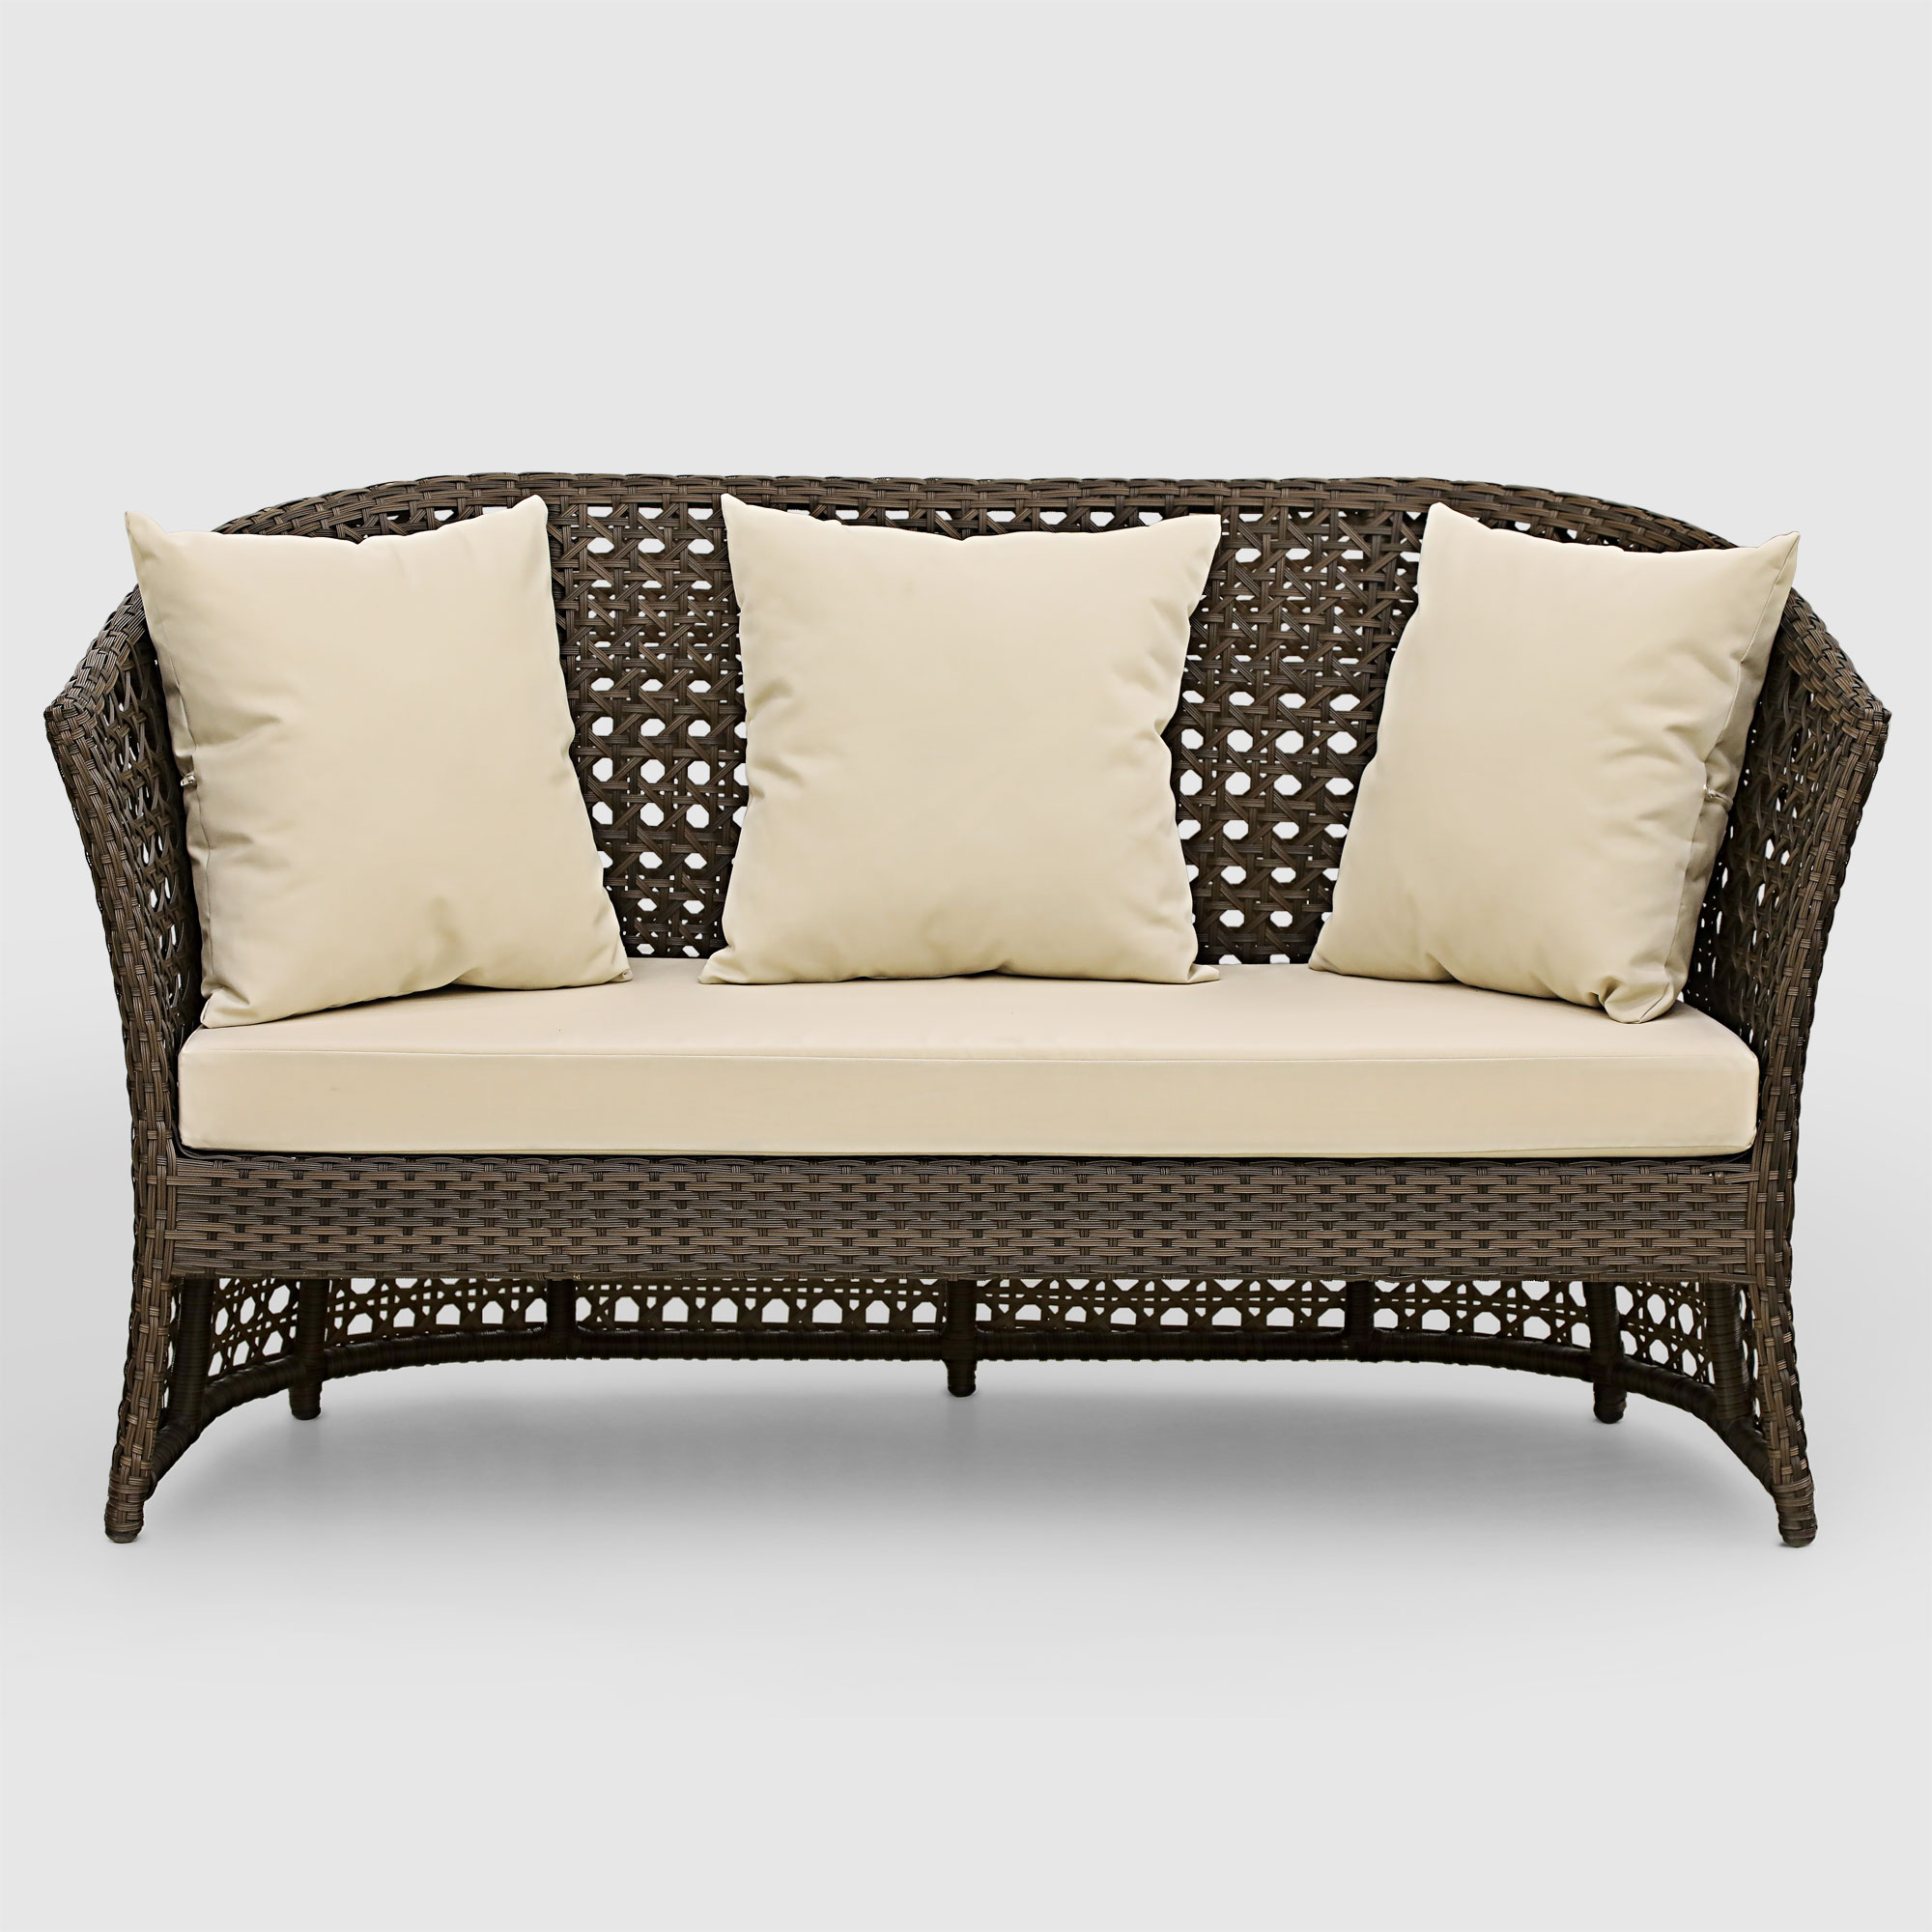 Комплект мебели Ns Rattan Linda коричневый с бежевым 4 предмета, цвет бежевый, размер 155х90х70 - фото 3